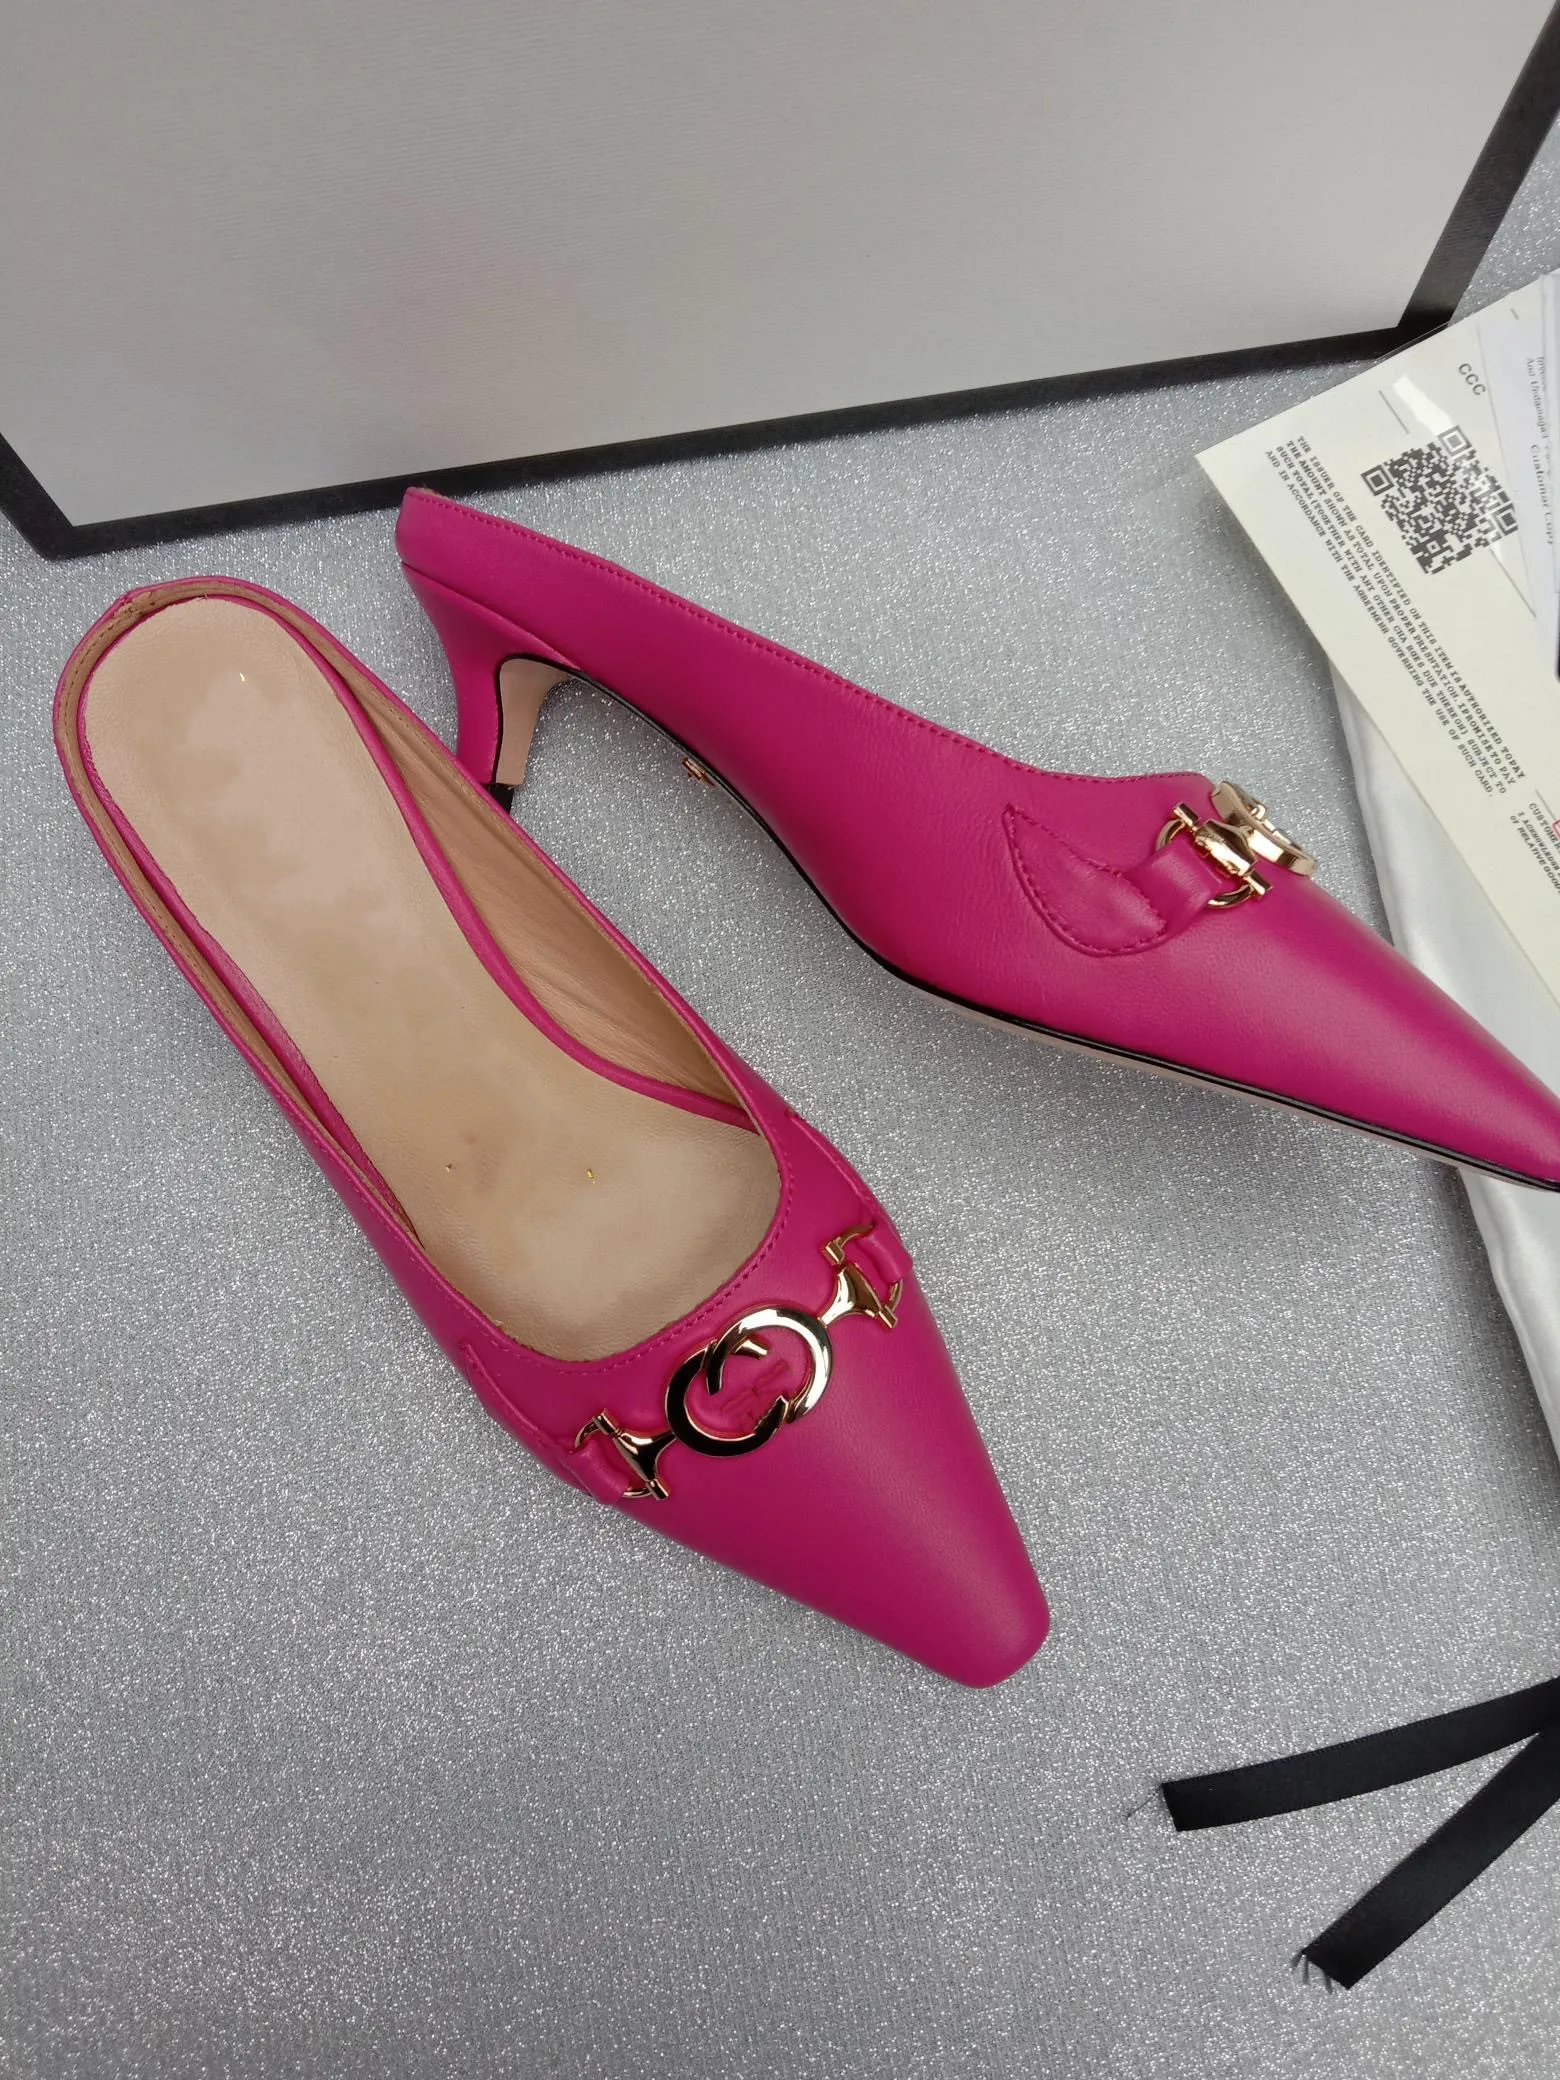 BOX 새로운 여성 신발 하이힐 빨간색 바닥 가죽 뾰족한 발가락 펌프 야외 바닥 드레스 신발 크기 36-43 NN0413